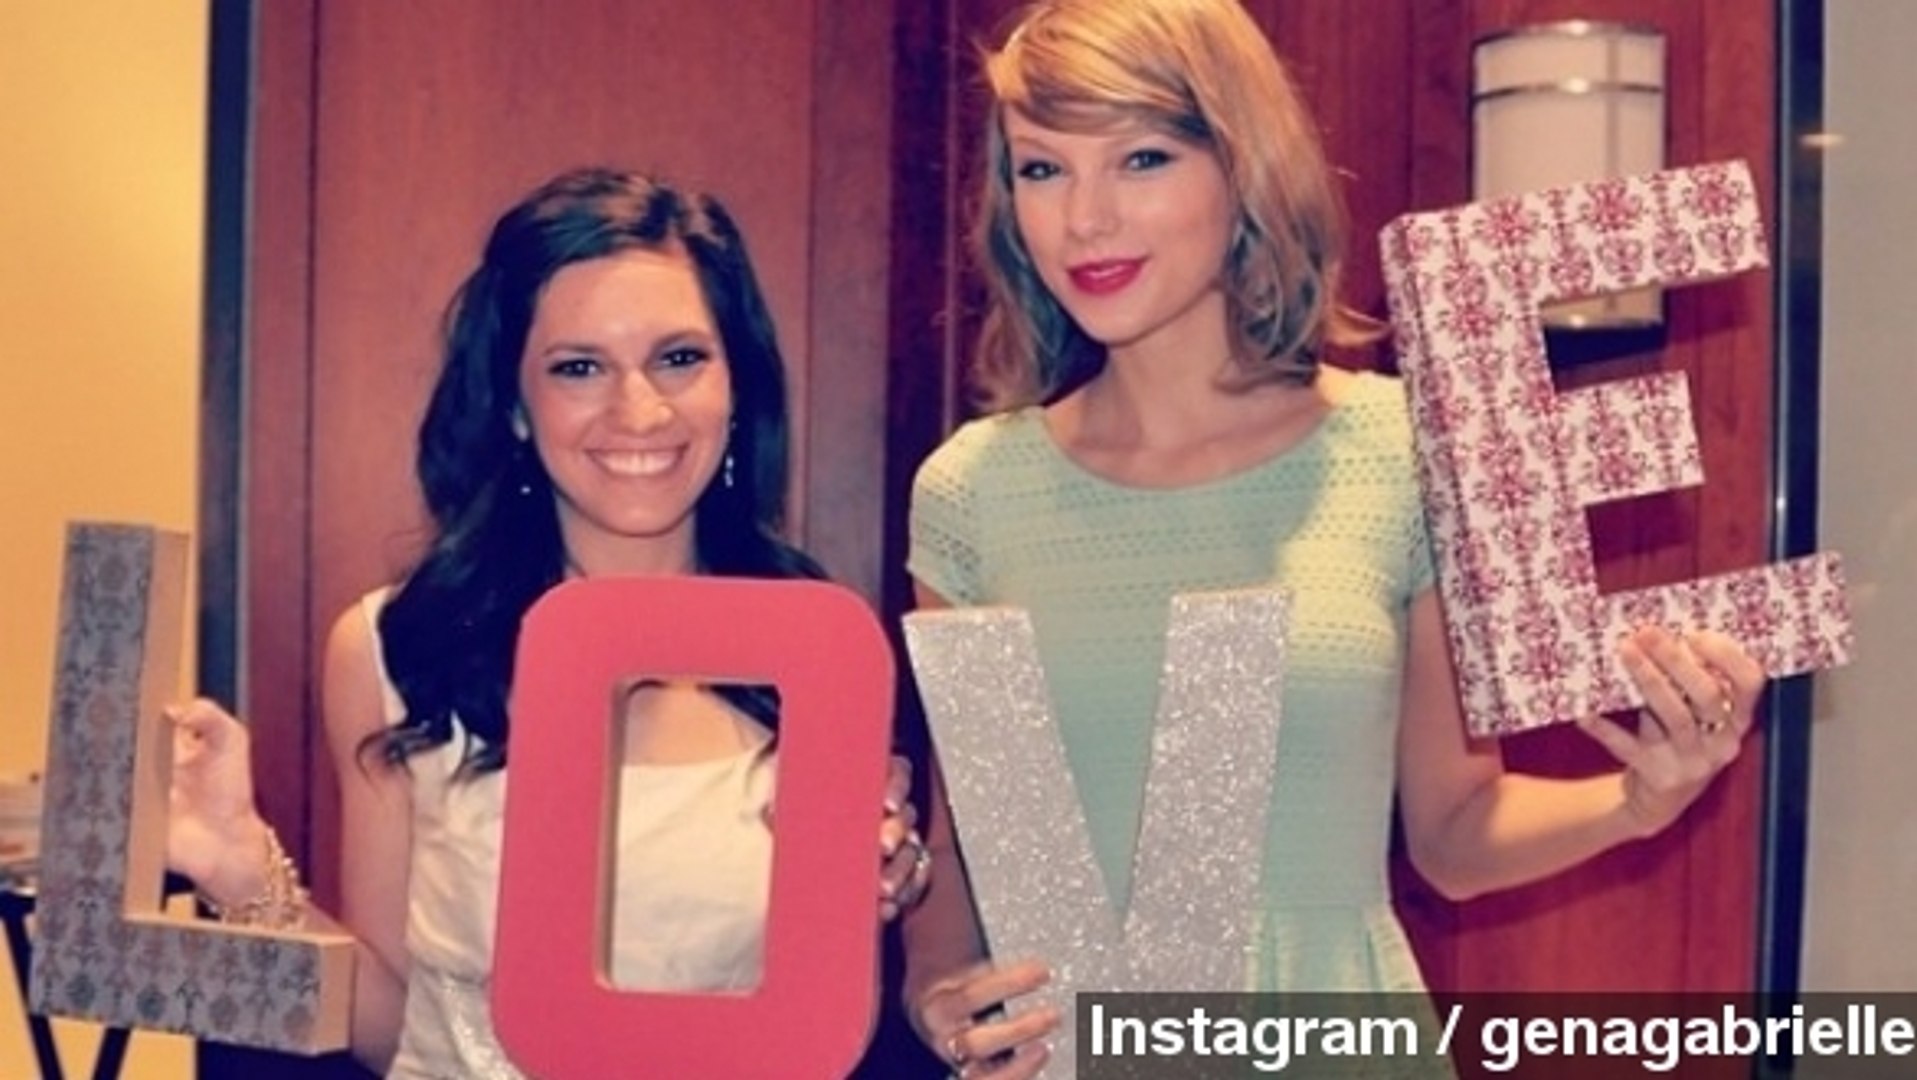 Taylor Swift Attends Fan's Bridal Shower, Even Brings Gifts